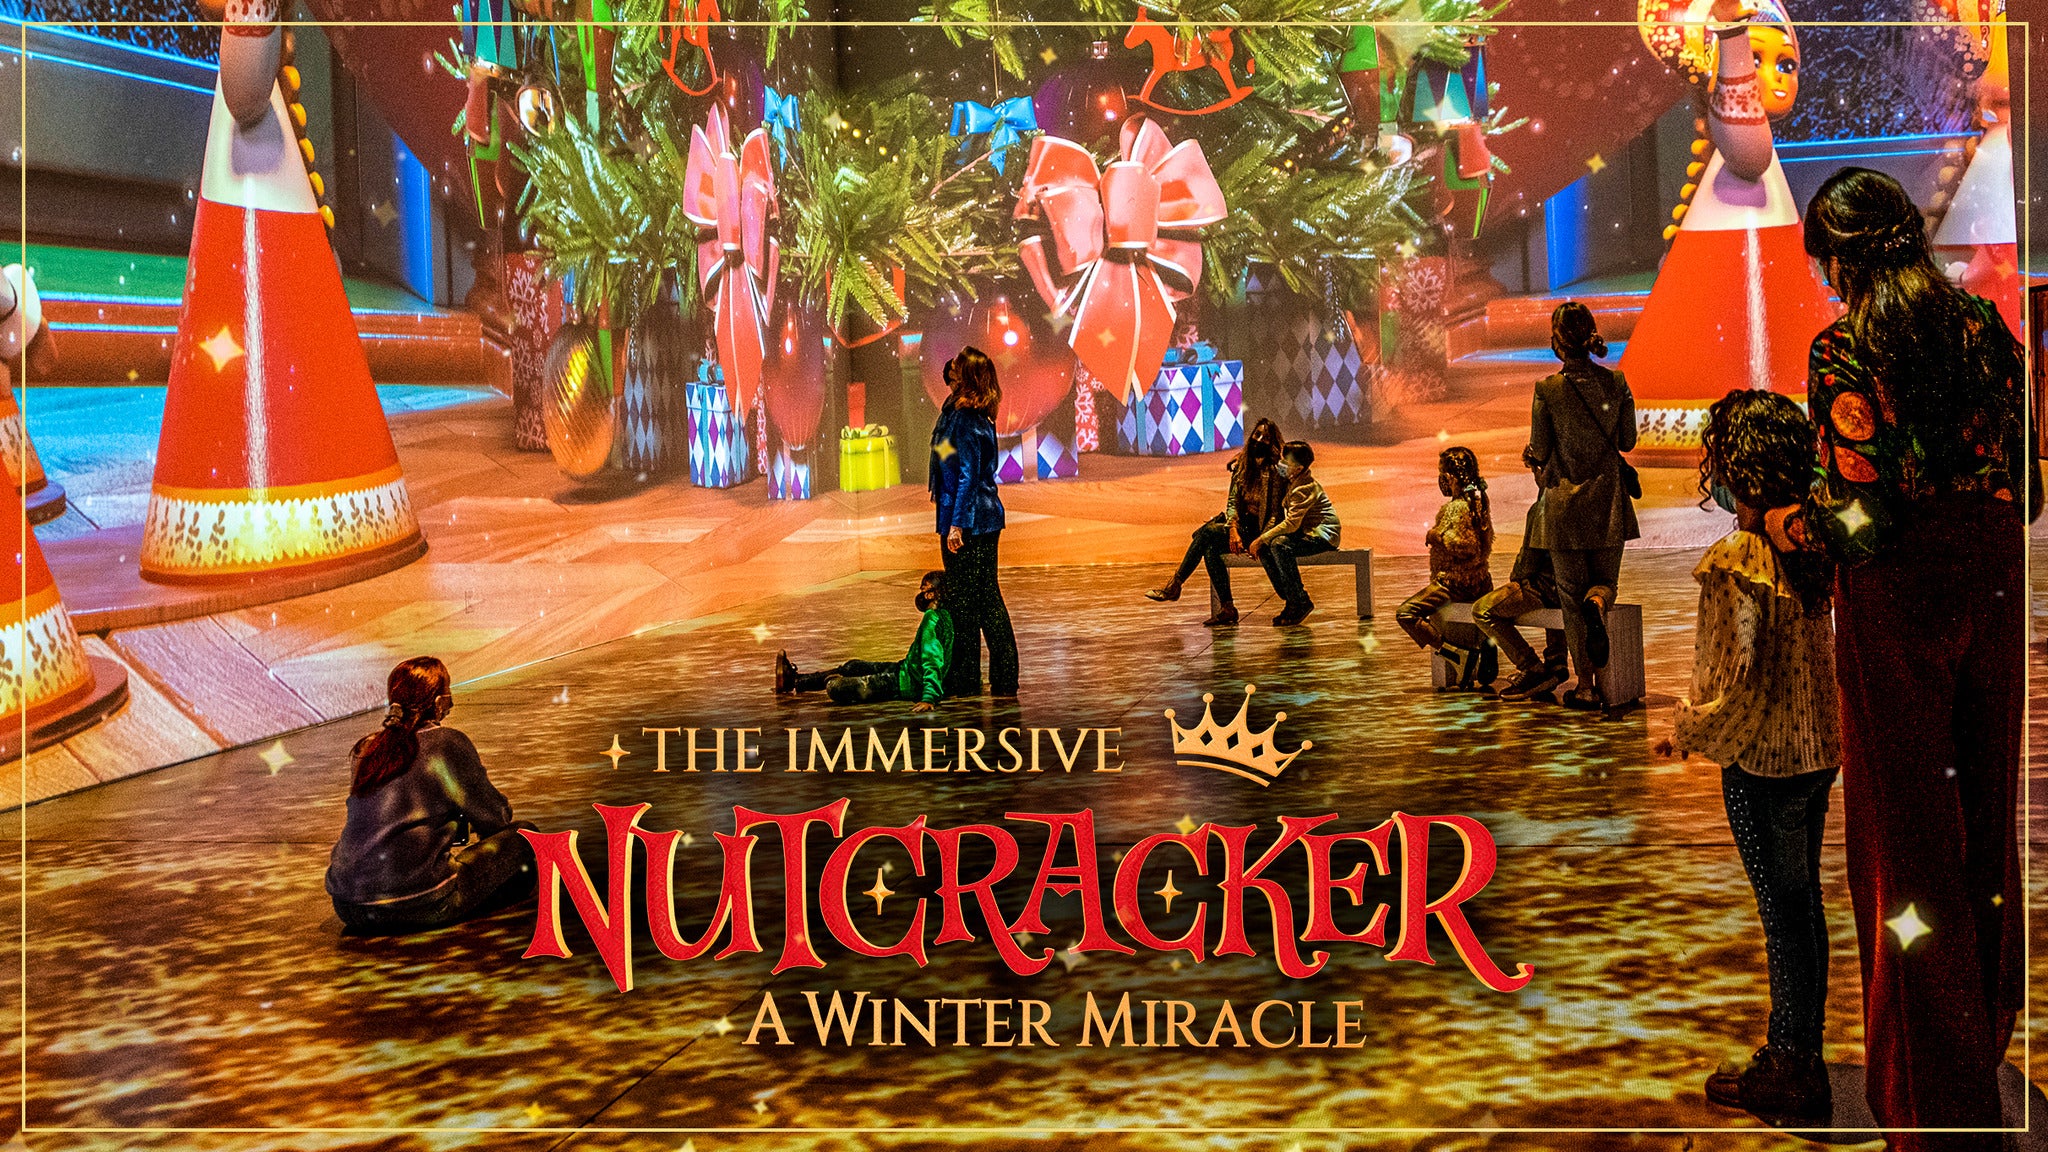 The Immersive Nutcracker - Los Angeles - Los Angeles, CA 90028